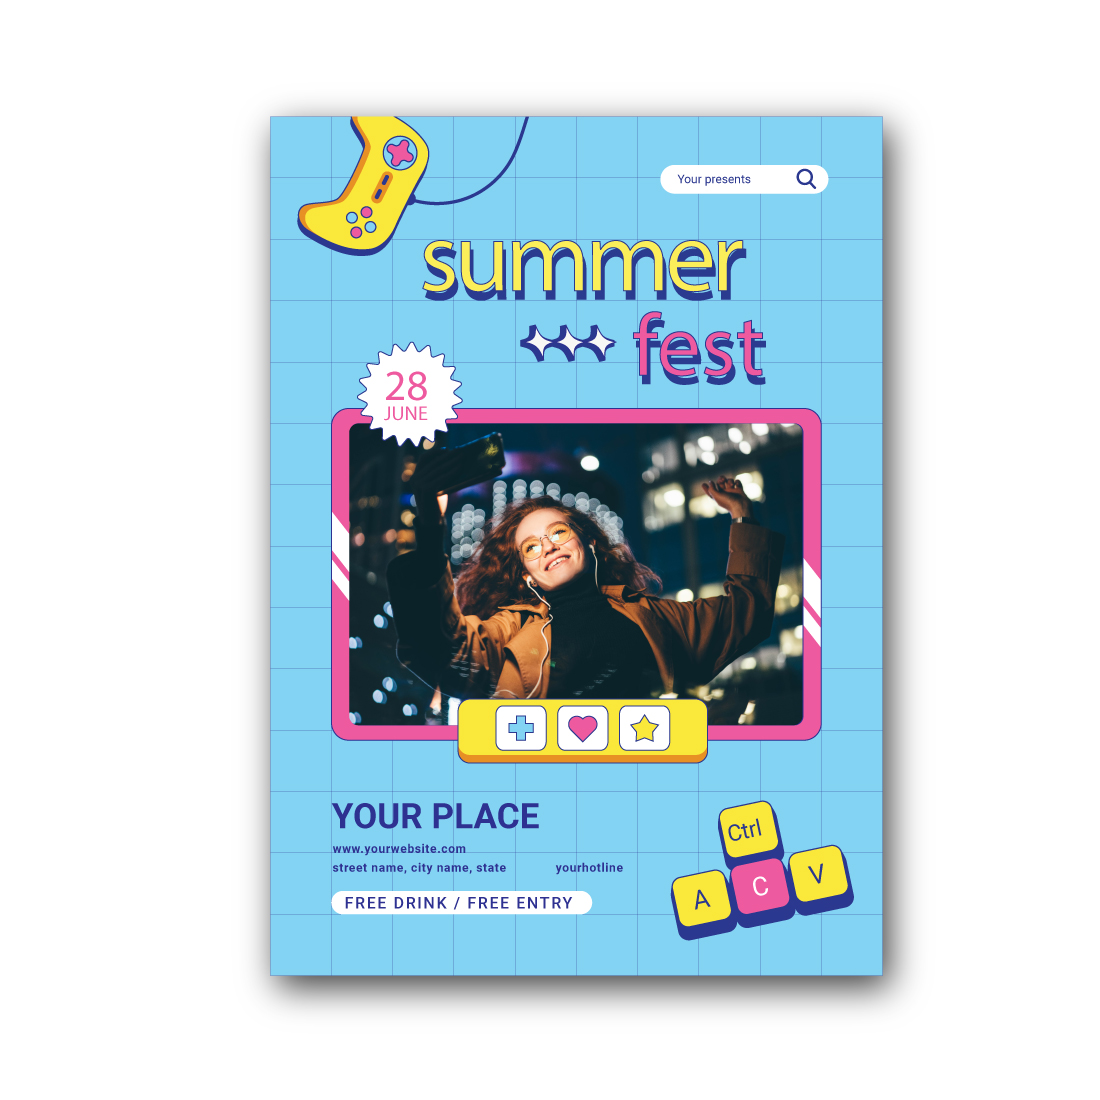 Summer Festival Flyer preview image.